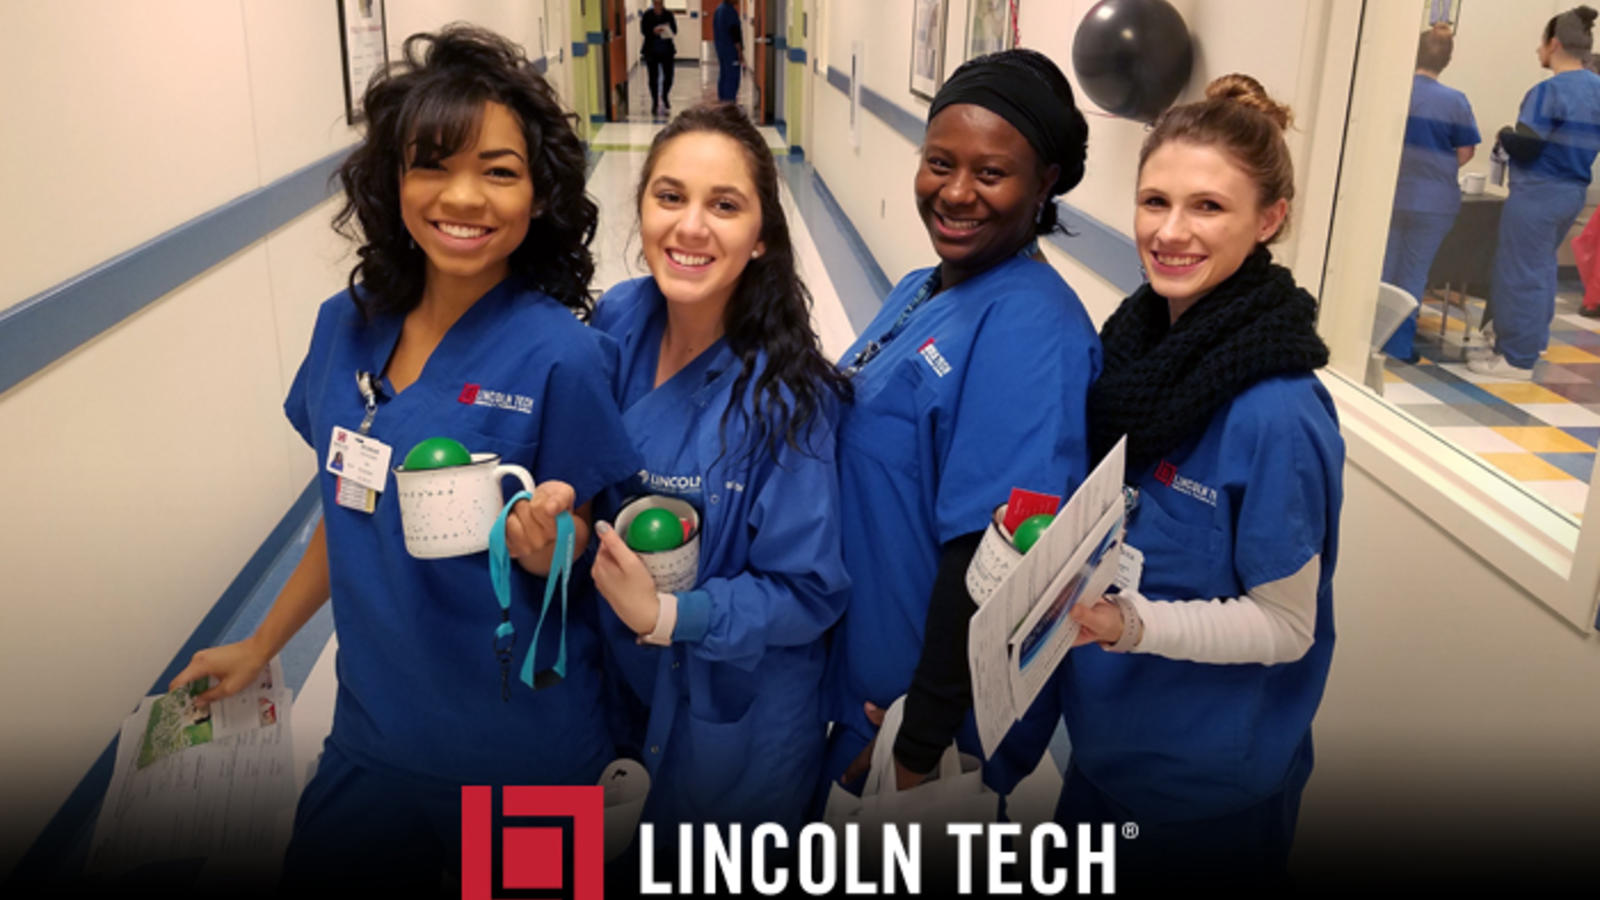 Career Training in Lincoln, RI - Spotlight on Lincoln Tech